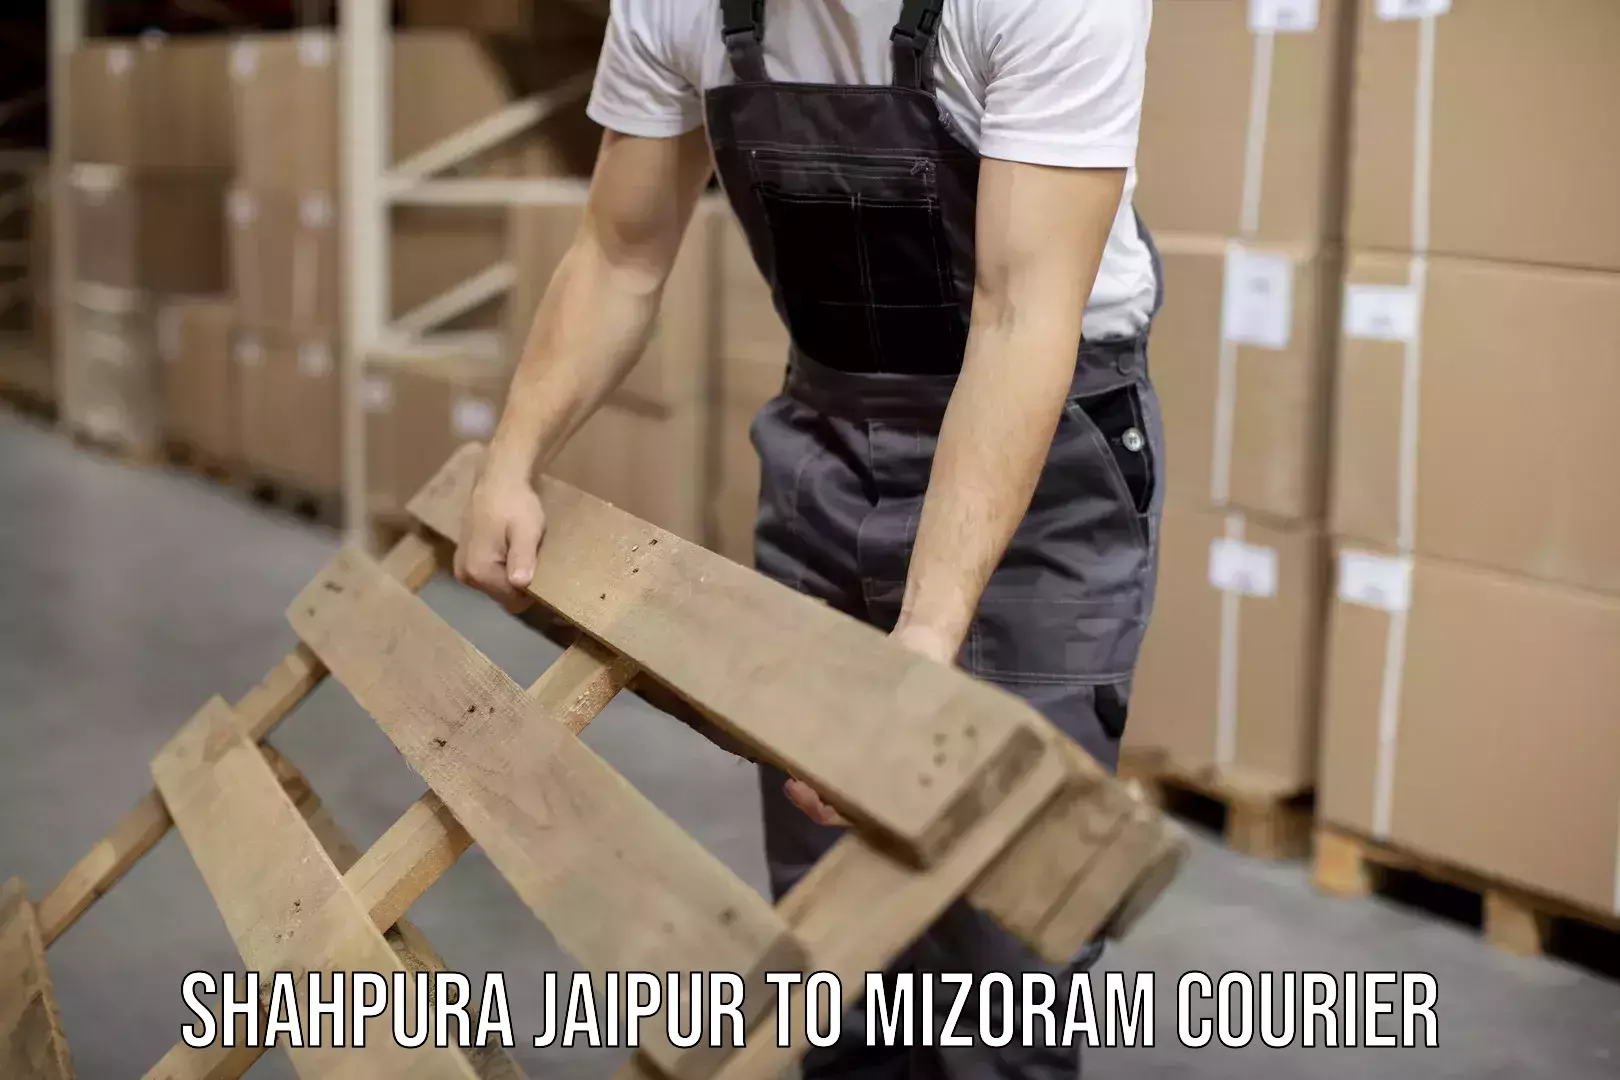 Courier service booking Shahpura Jaipur to Mizoram